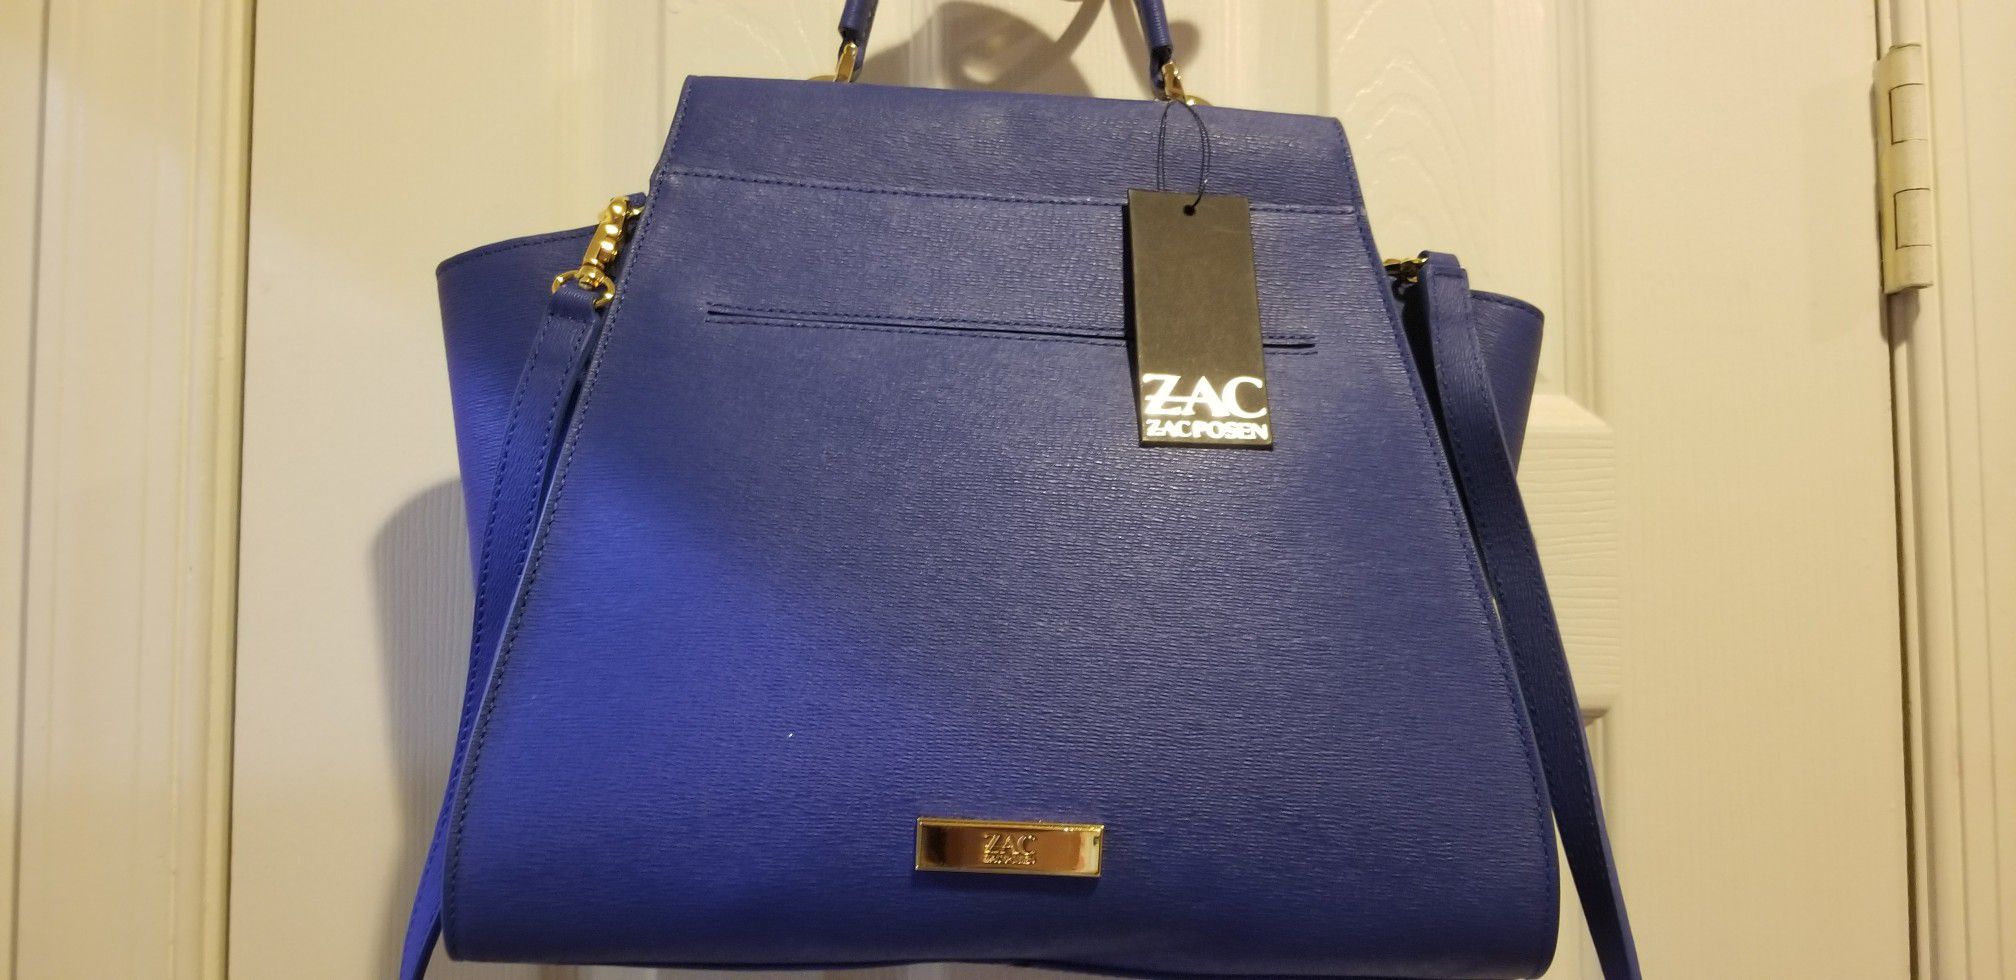 Zac Posen authentic high class bags